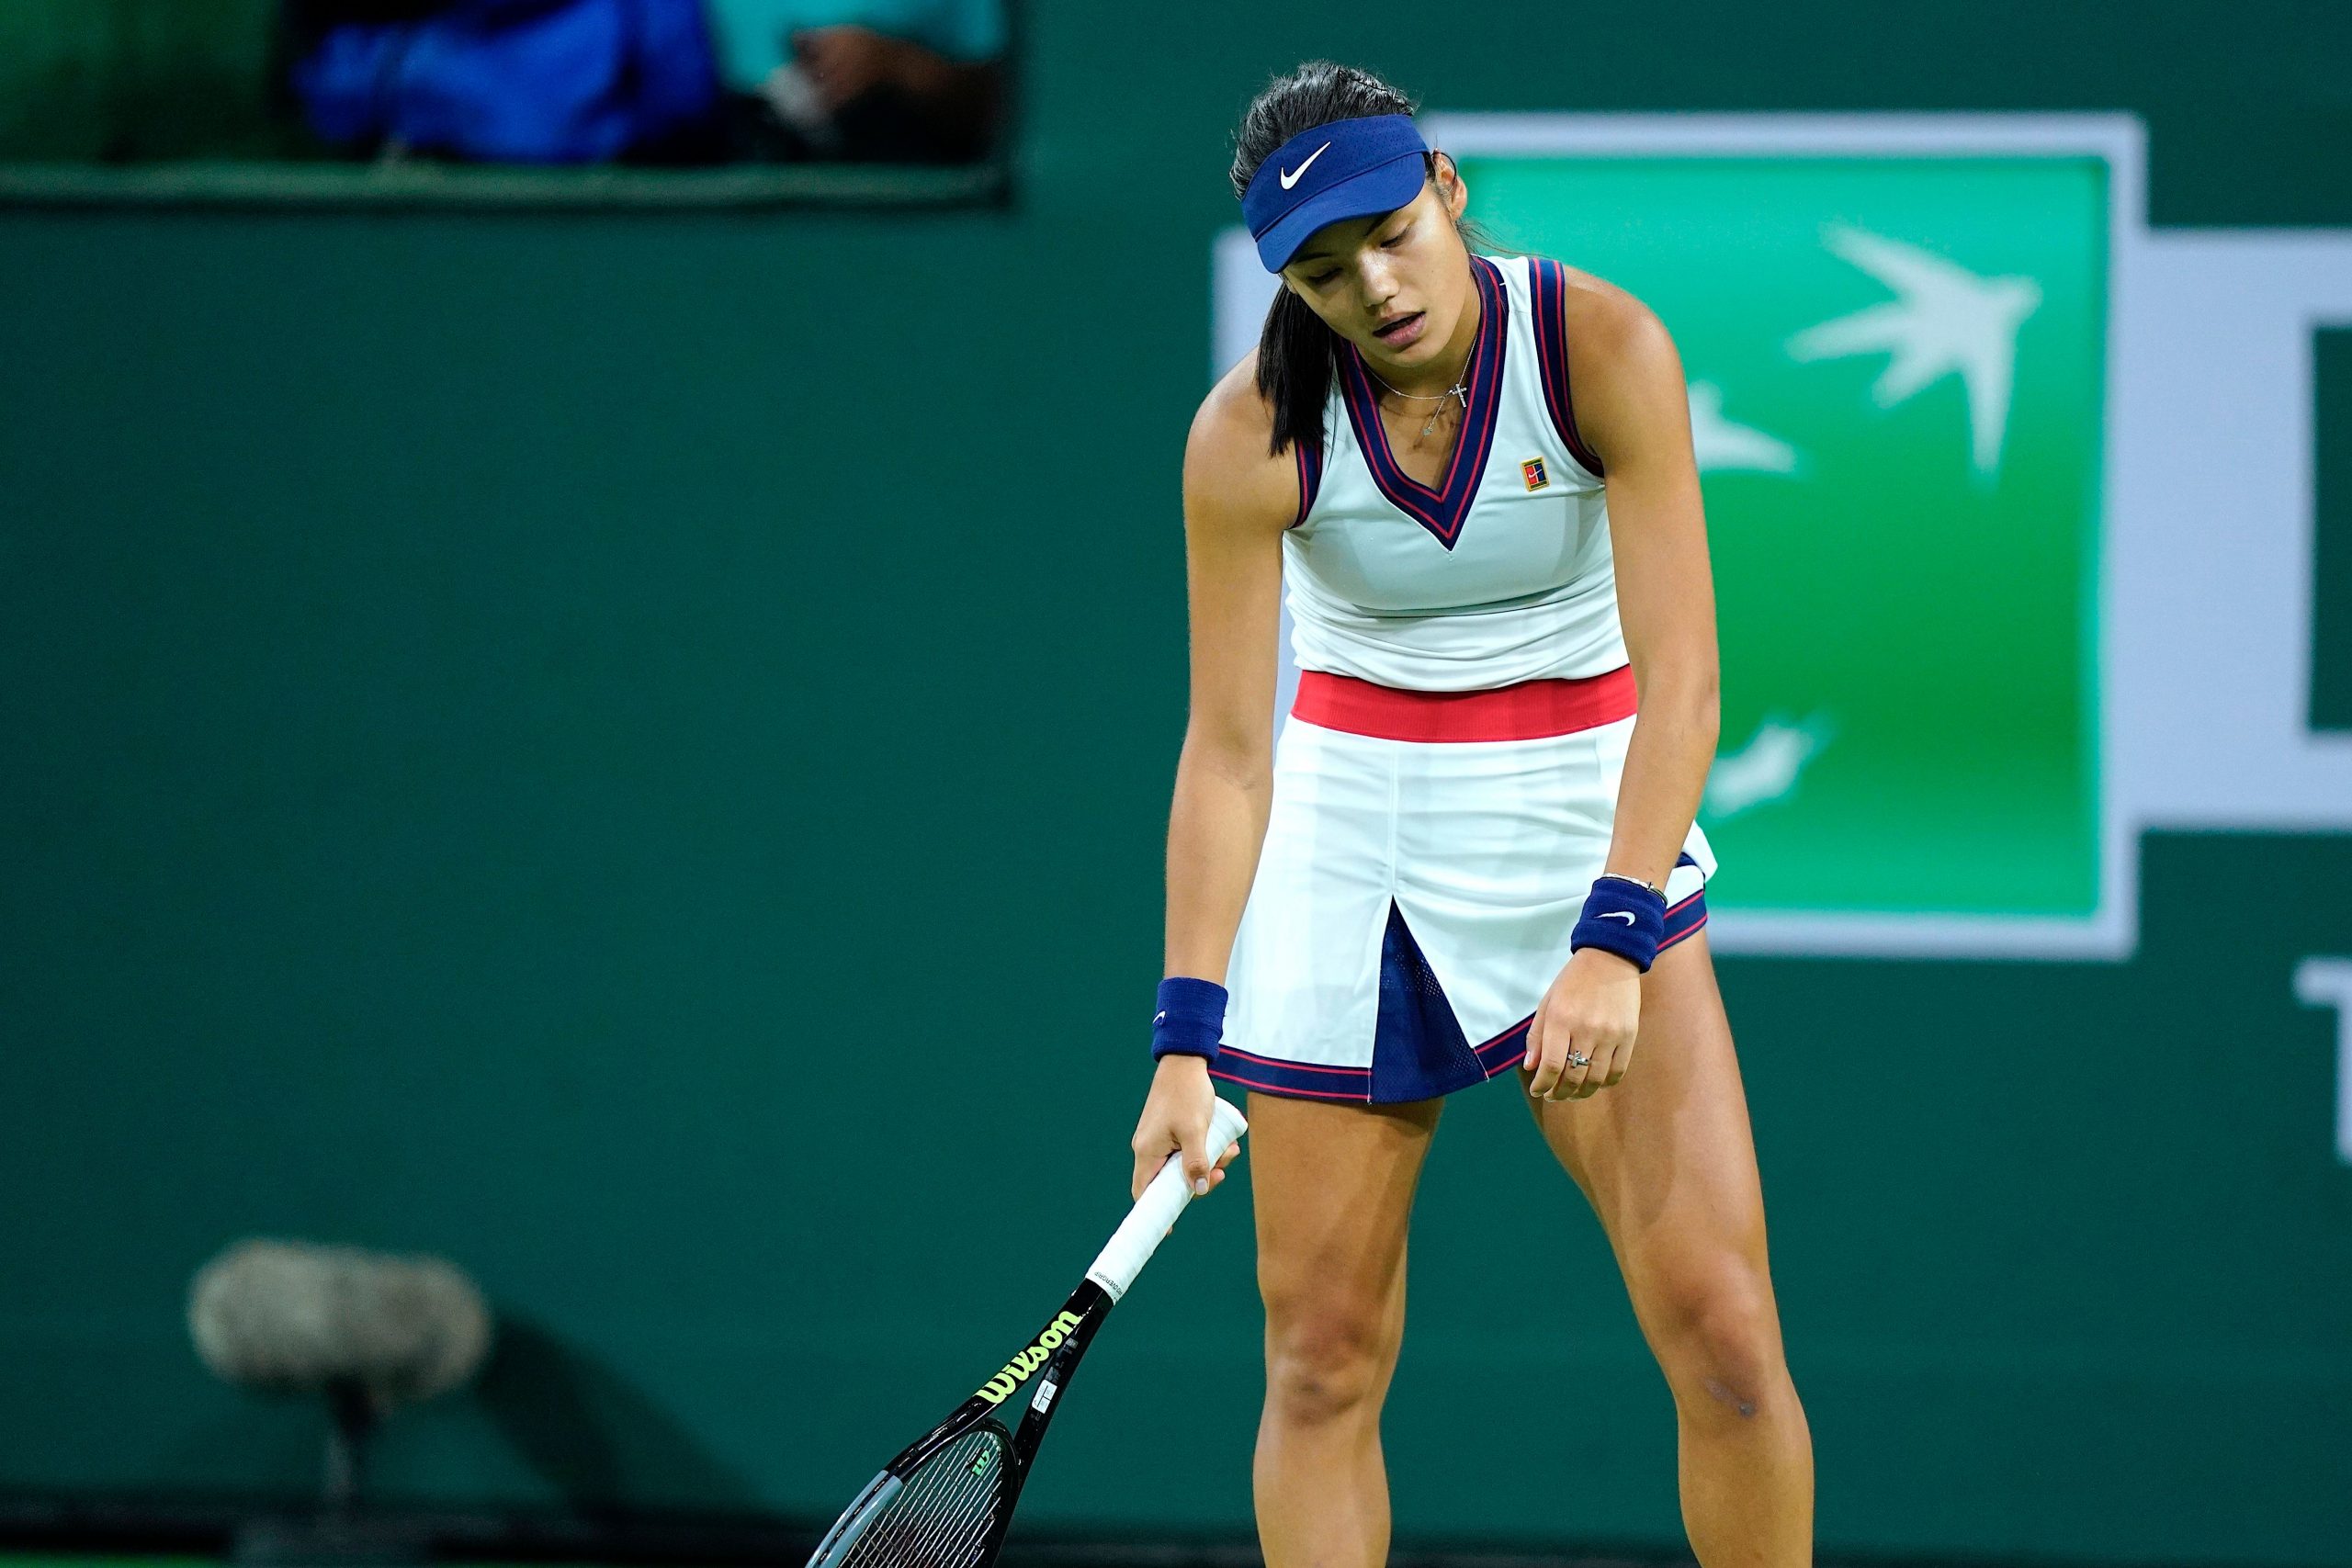 Emma Raducanu beaten in 1st competitive game since US Open title